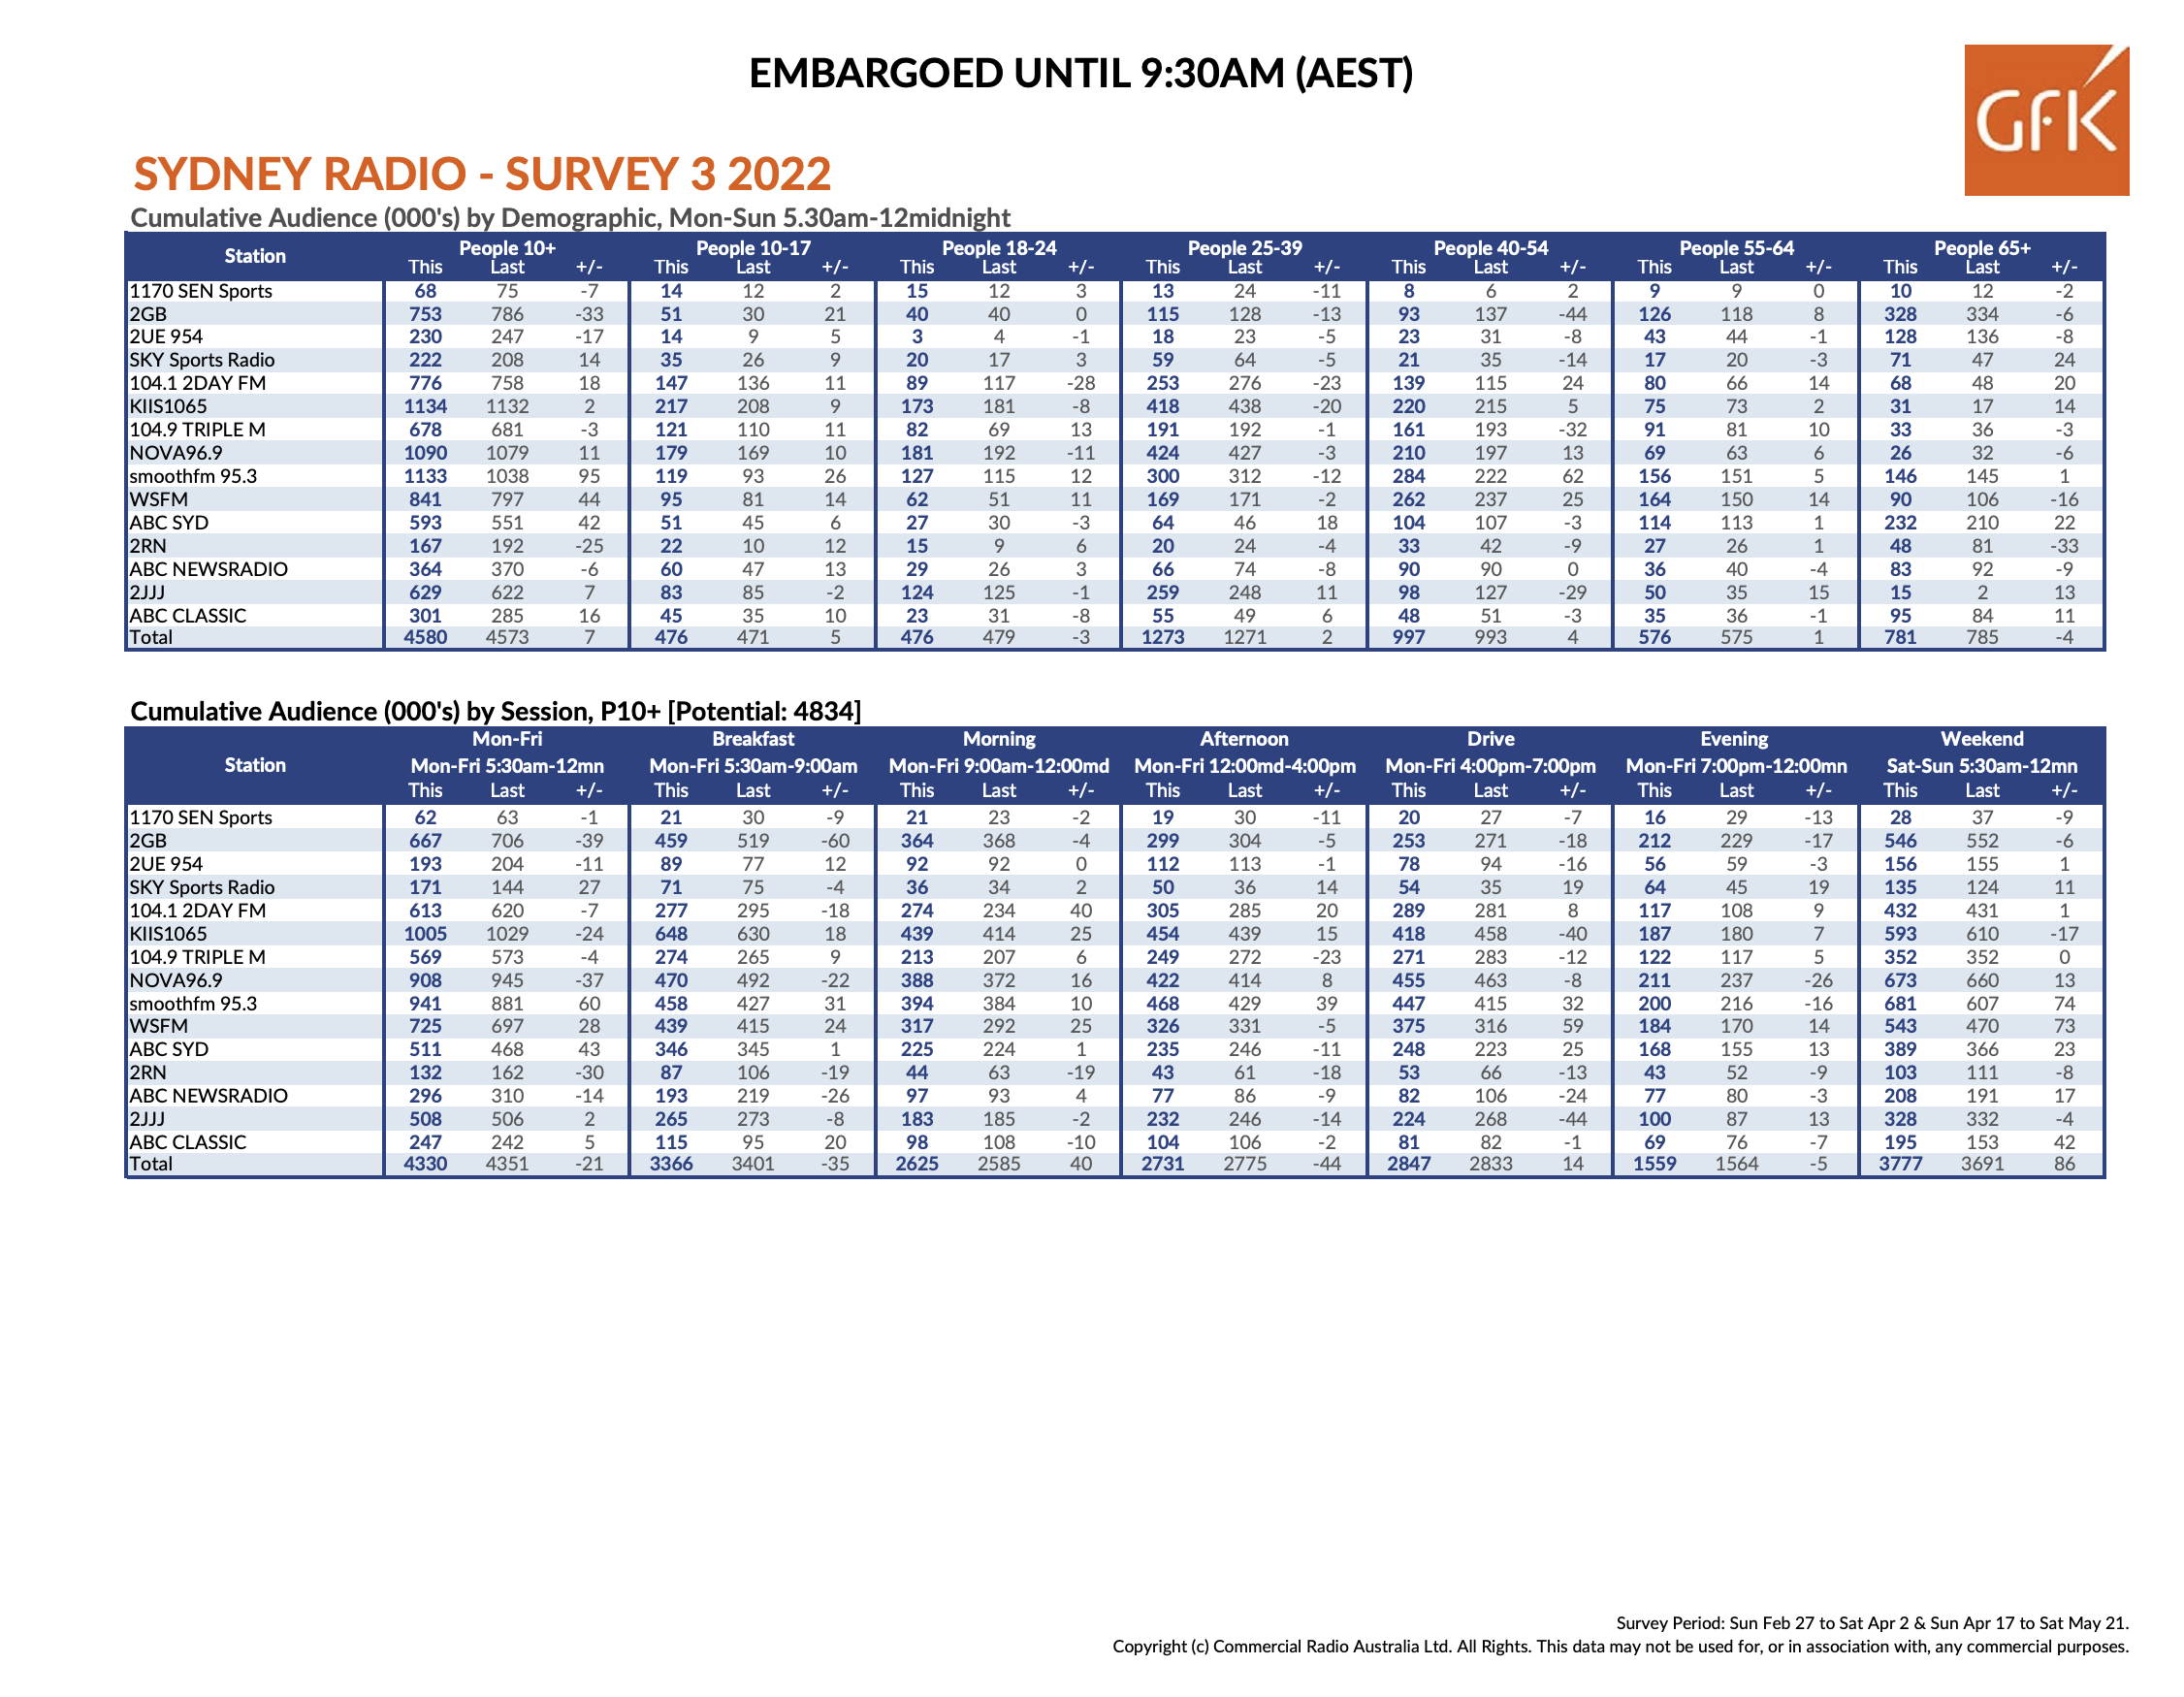 Sydney radio audience size Survey 3 